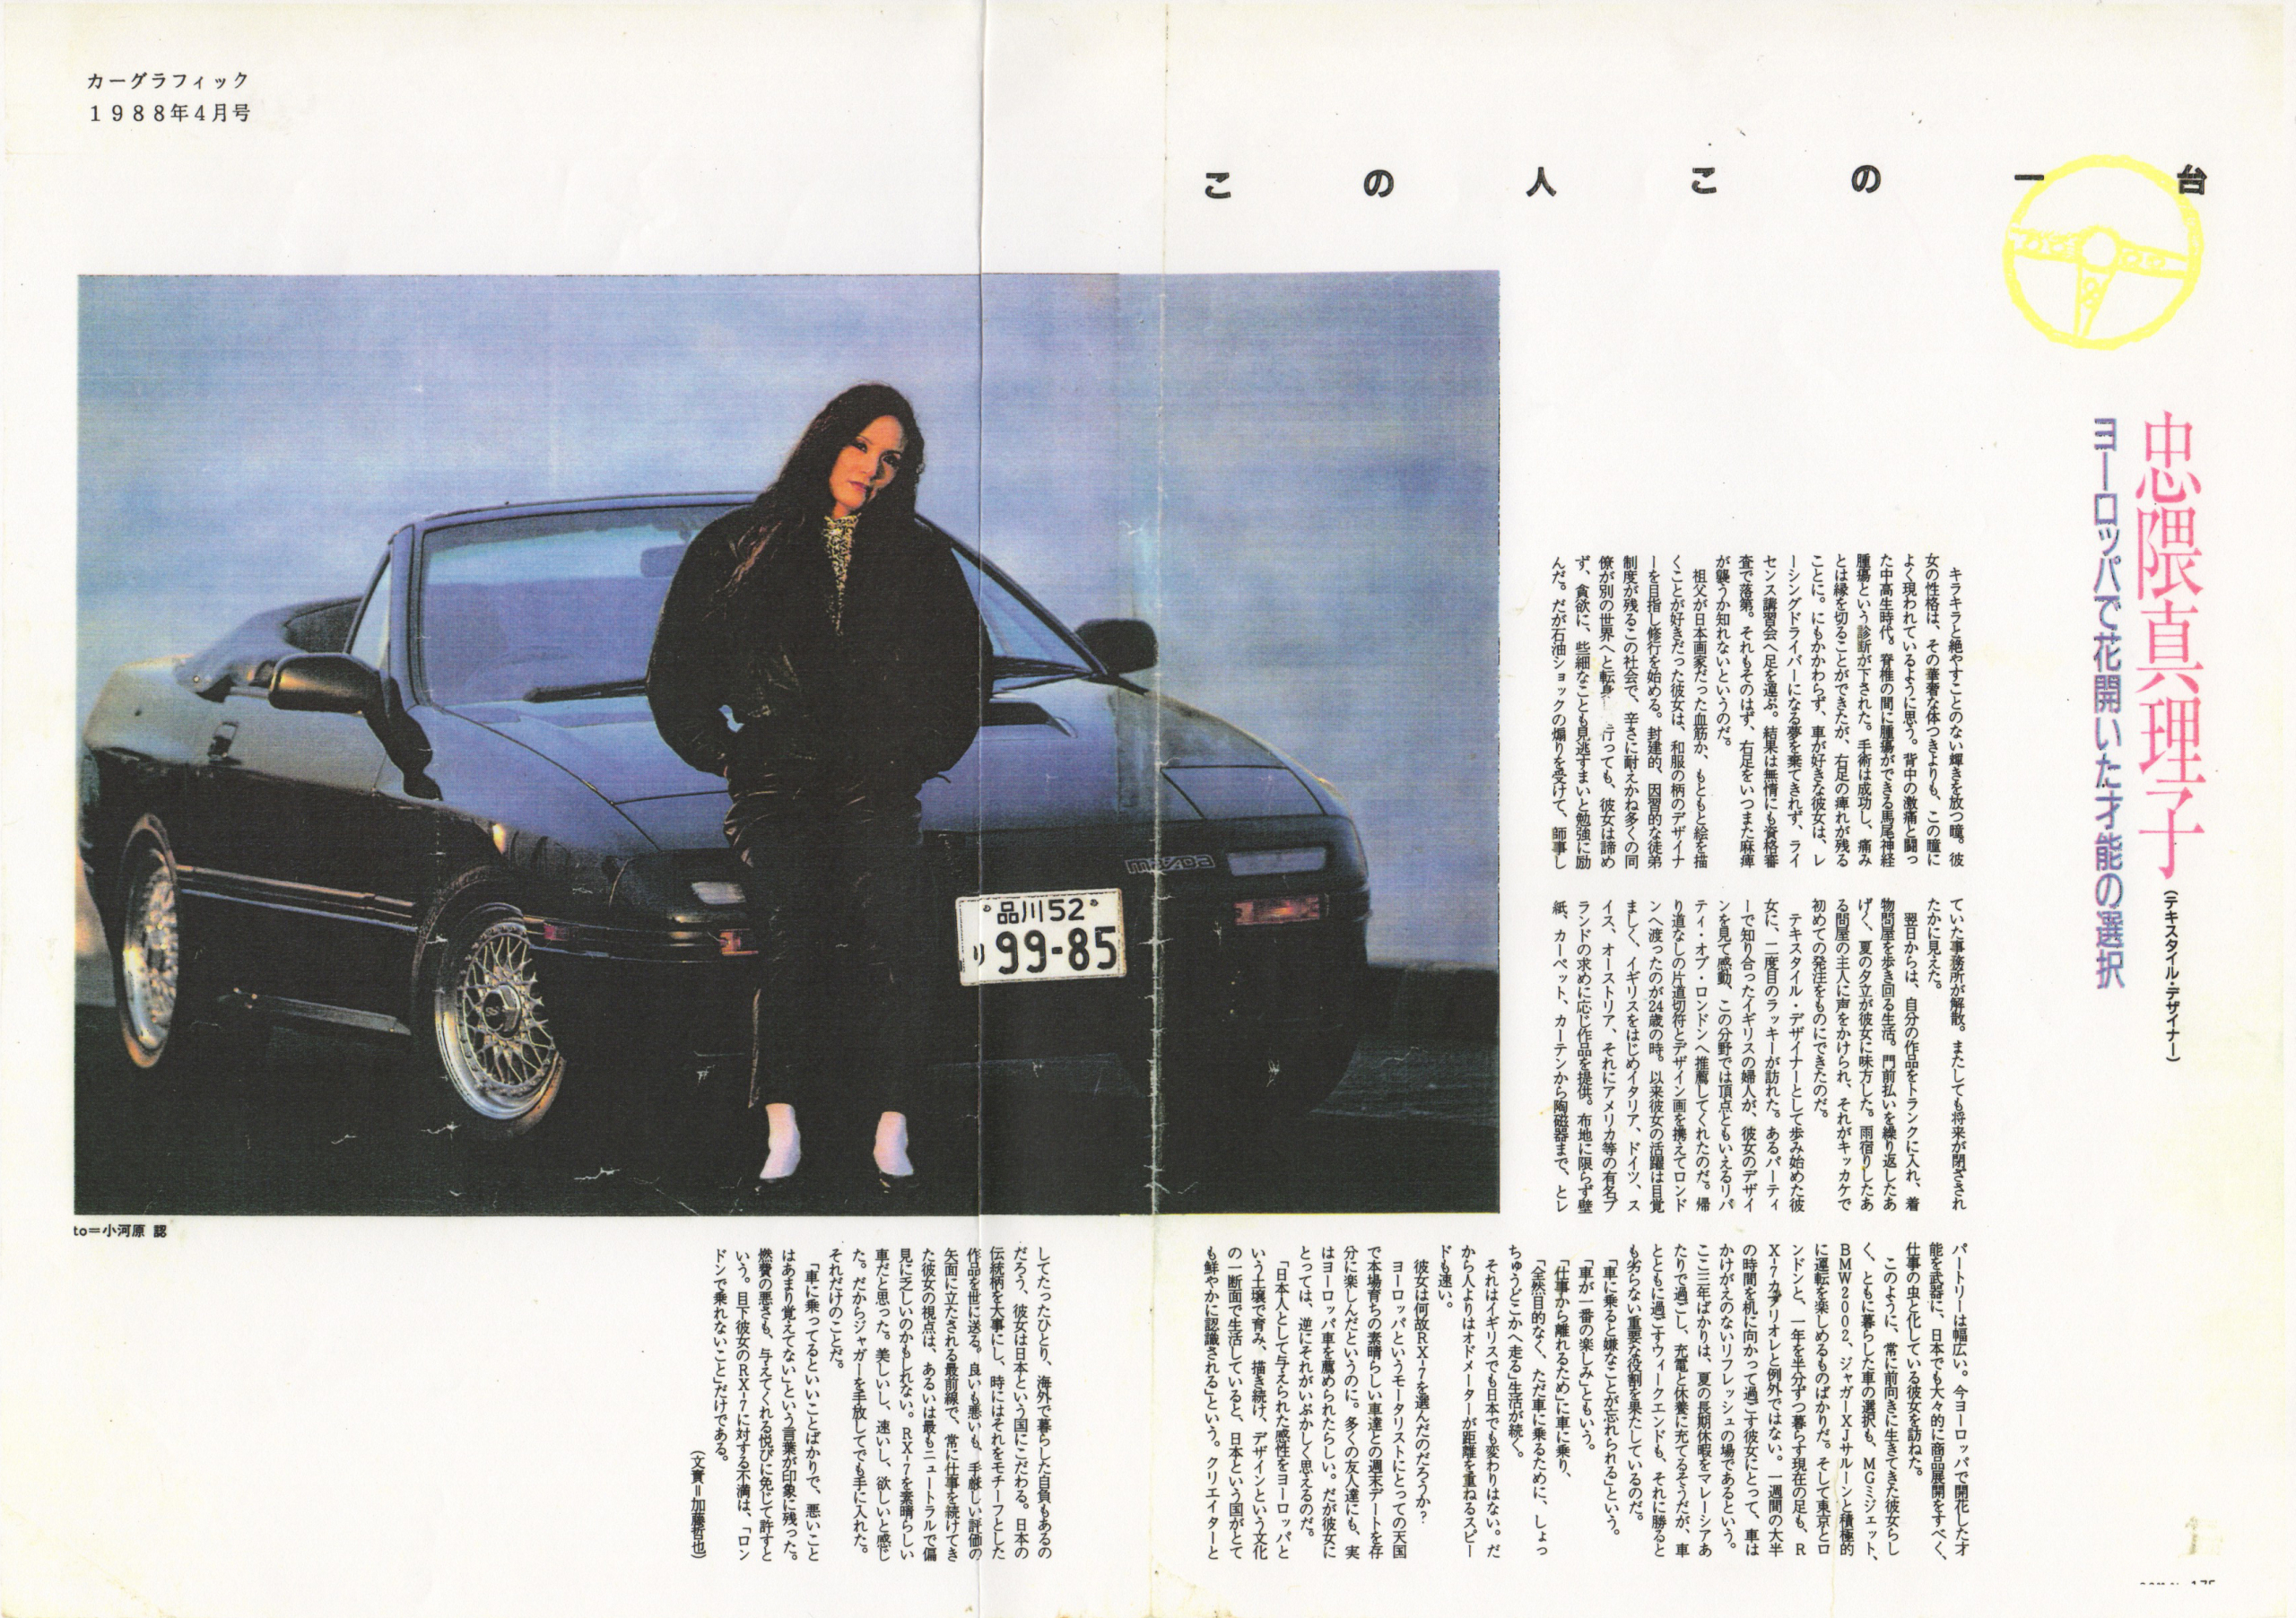 CAR GRAPHIC APRIL 1988 | Mariko Tadakuma Official Web - Artist 